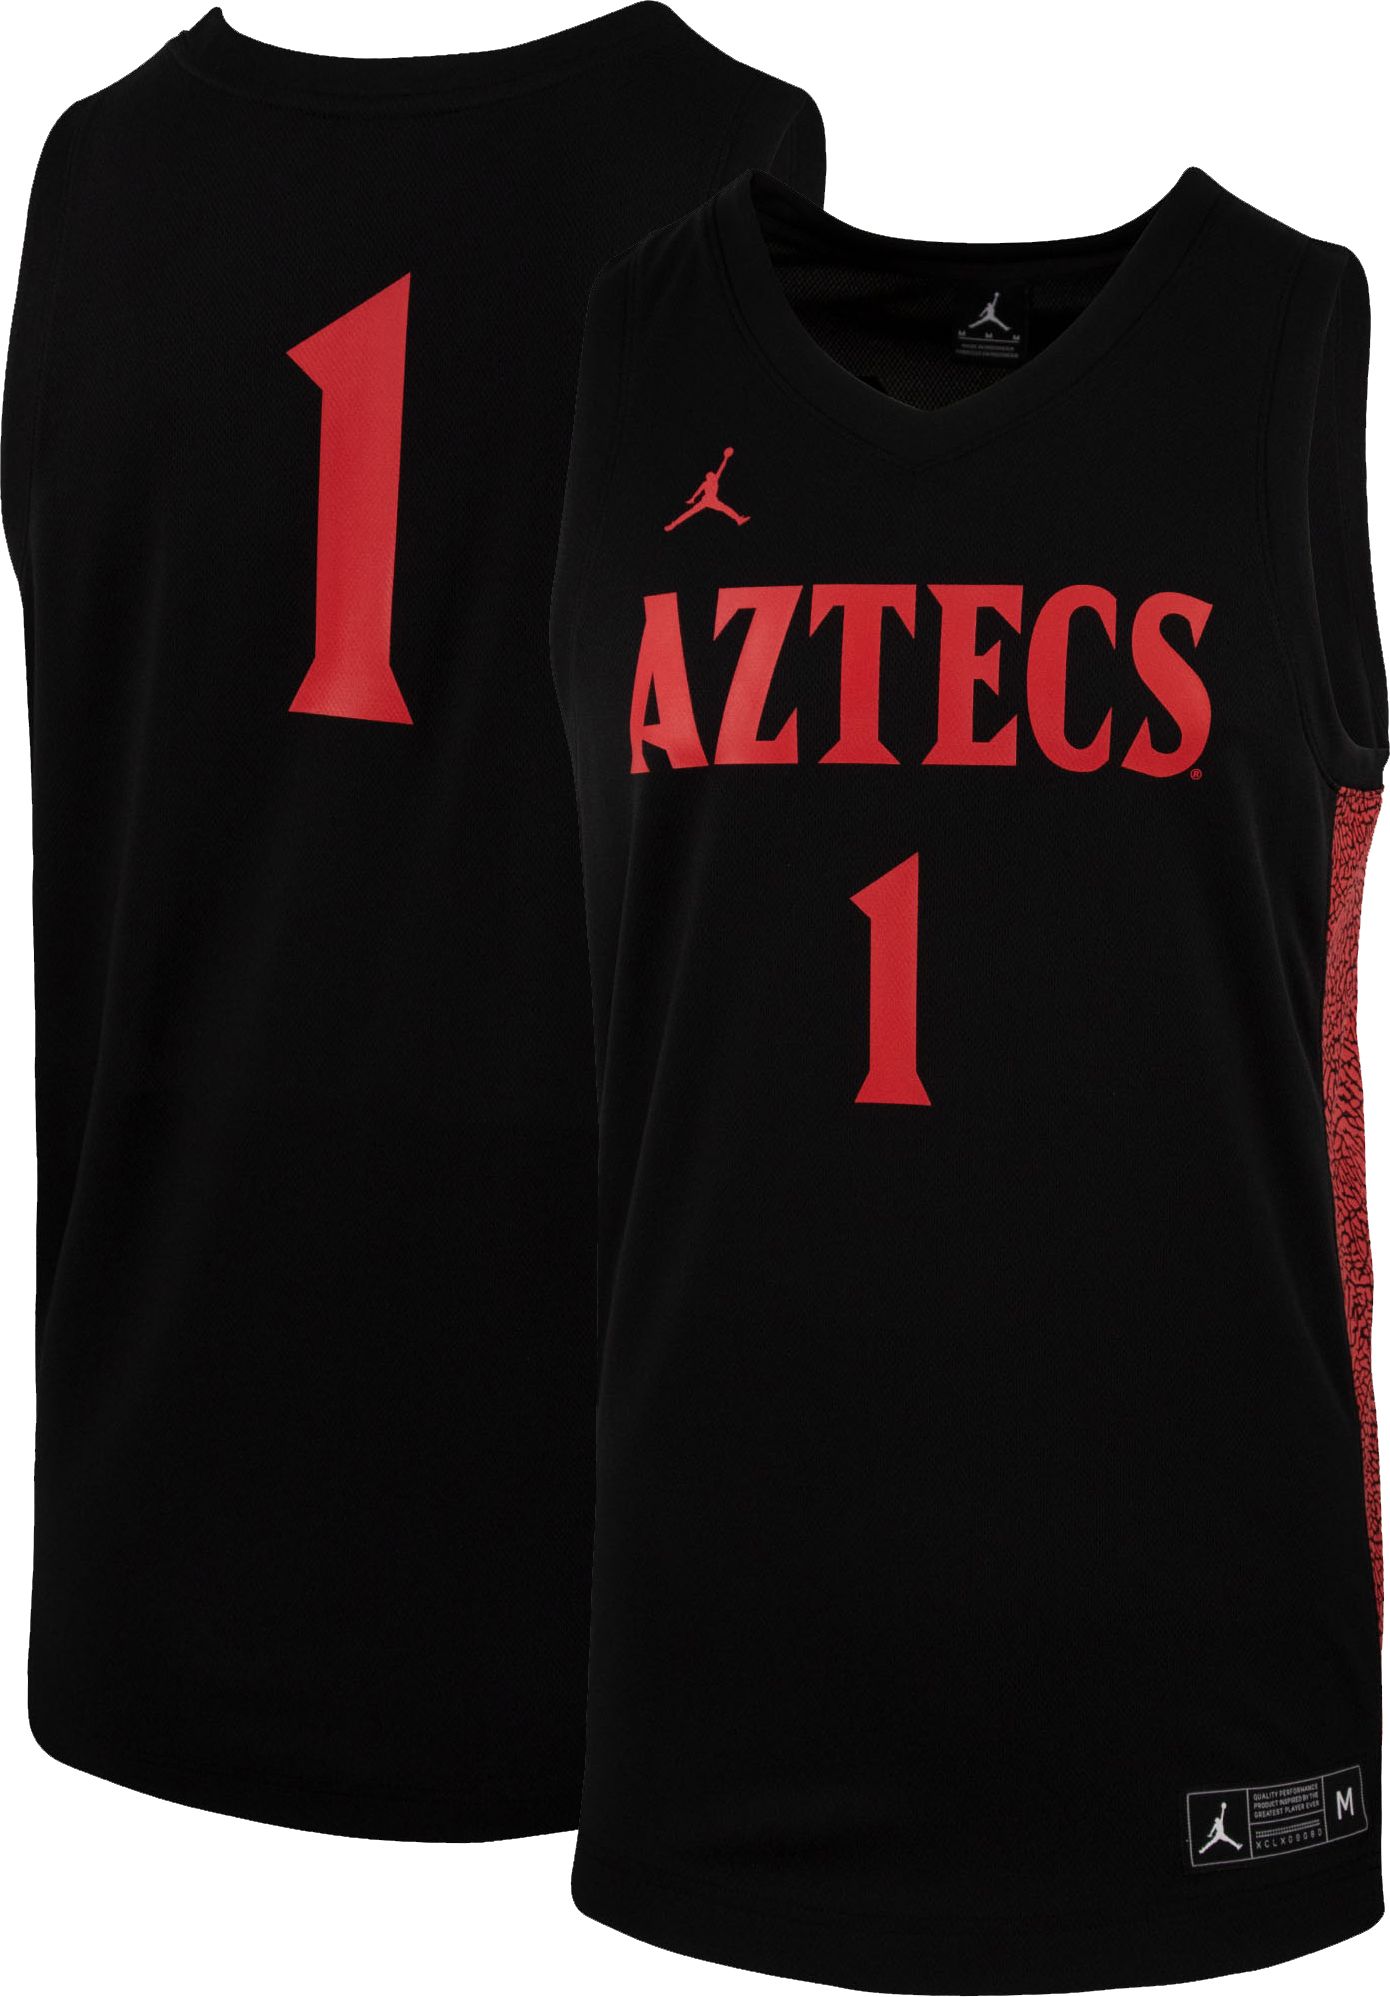 Jordan / Men's San Diego State Aztecs #1 Replica Basketball Black Jersey